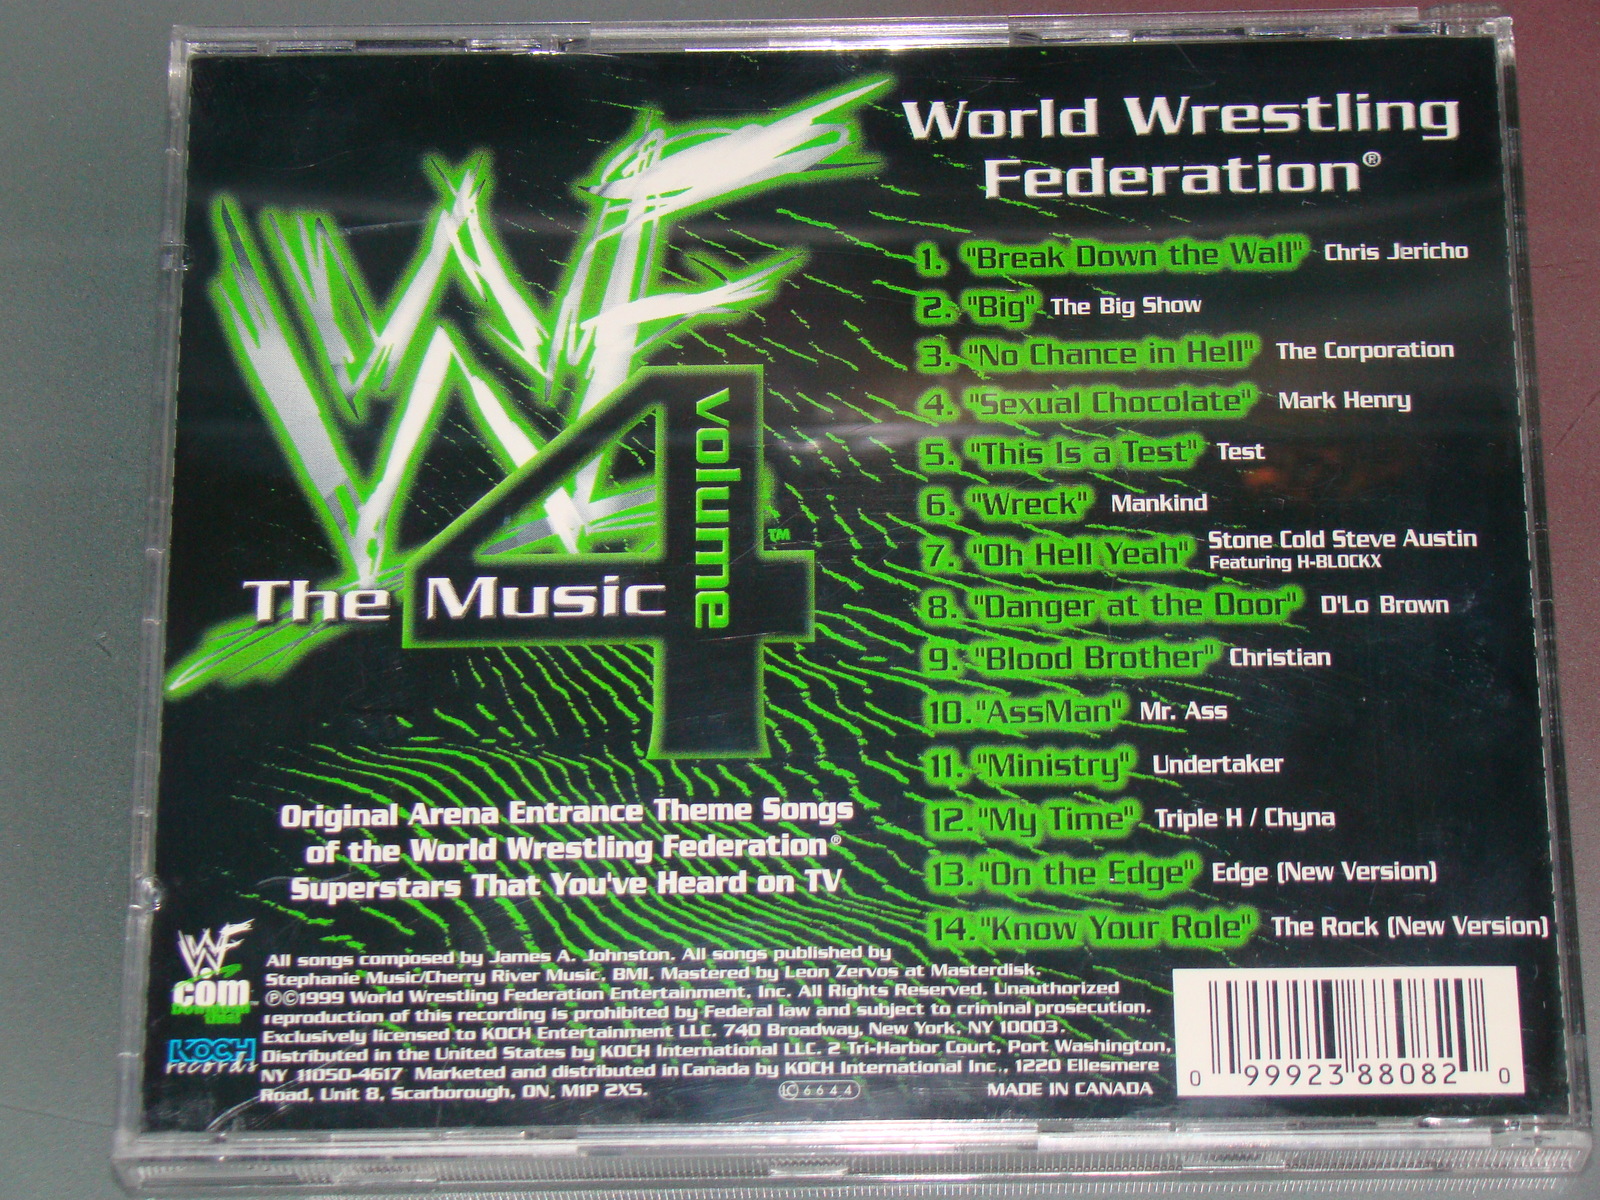 Wwf World Wrestling Federation - The Music and 50 similar items